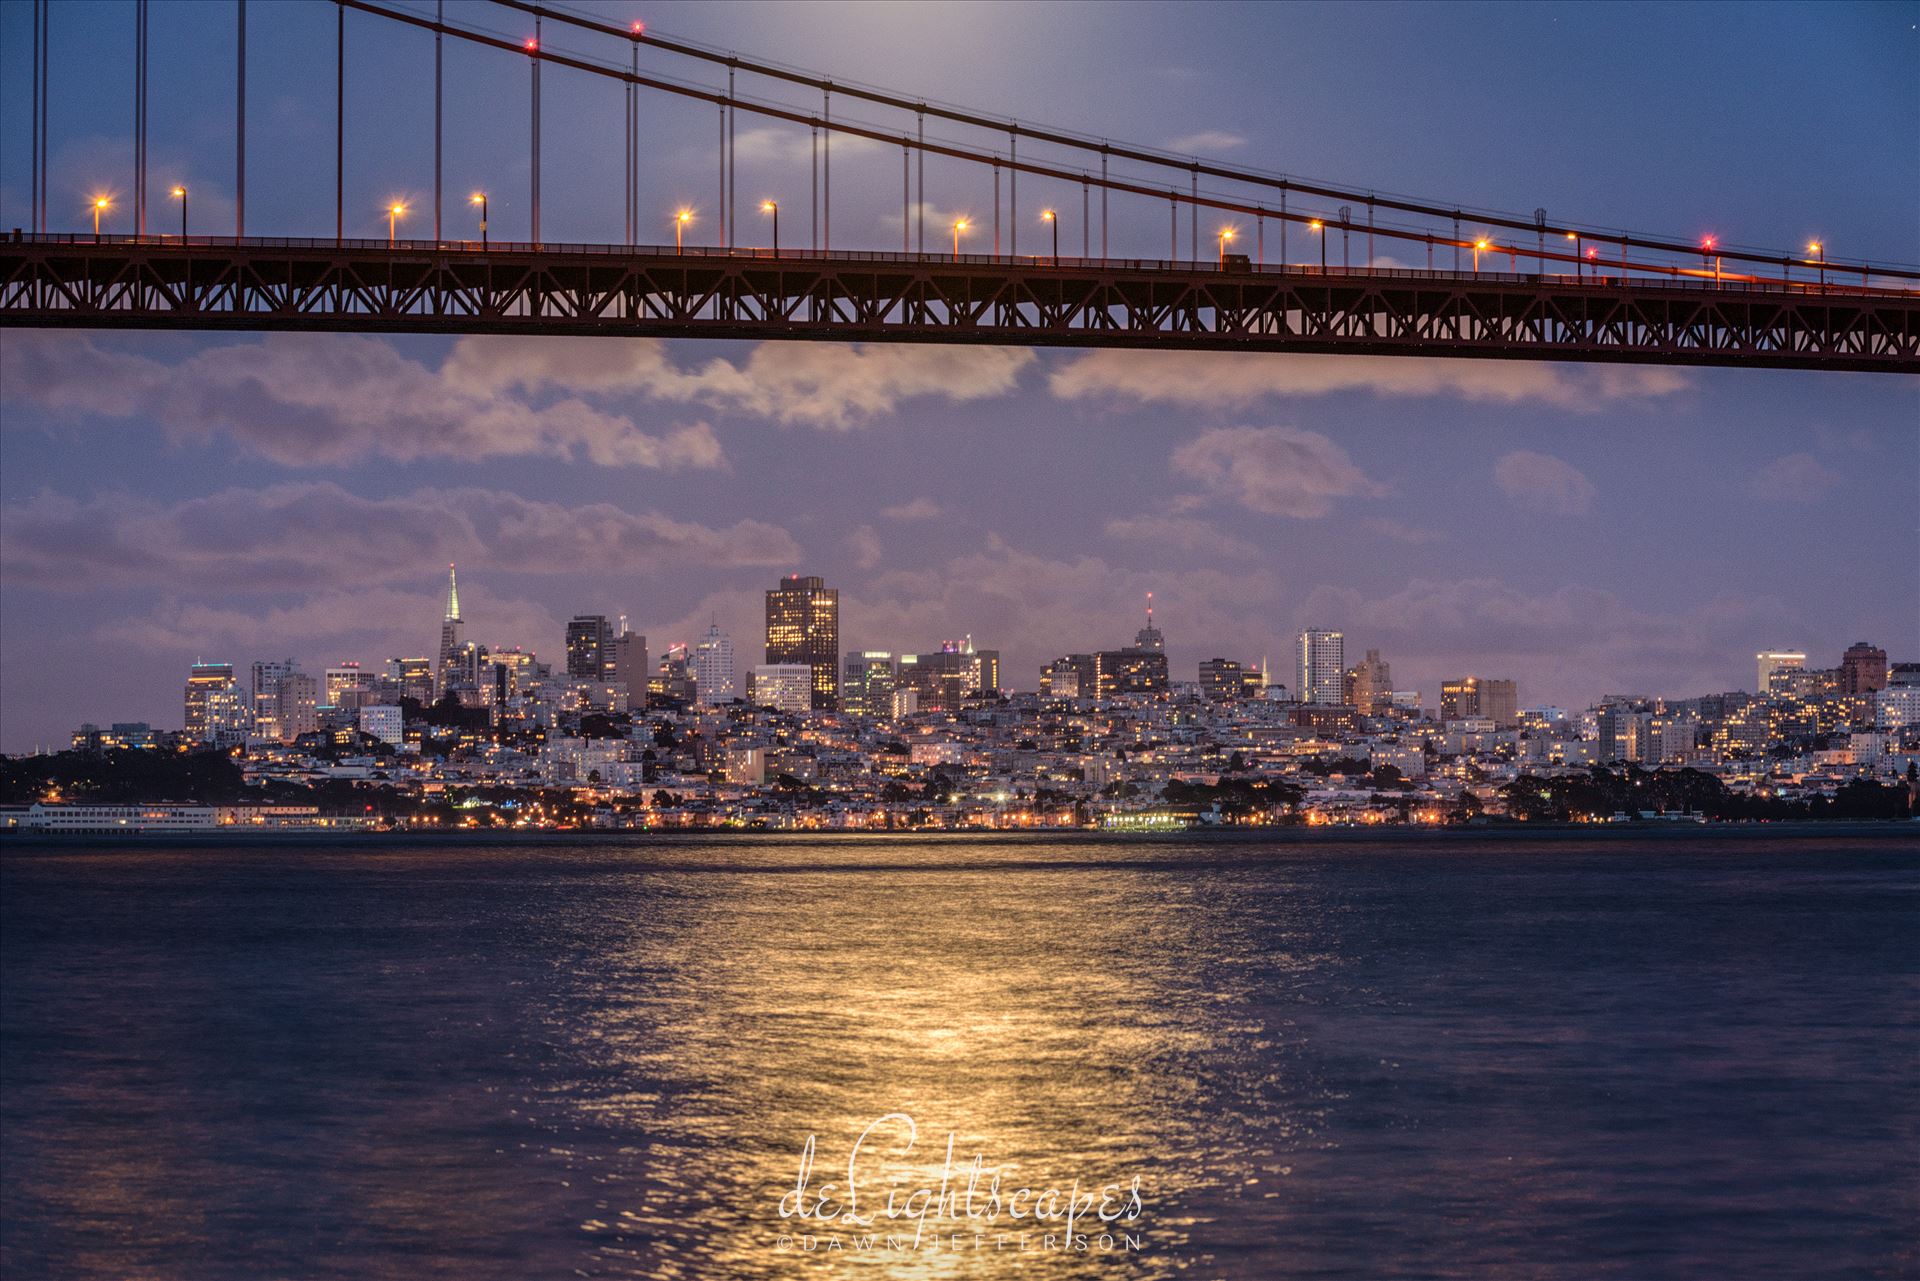 San Francisco by Moonlight A full moon rises above the Golden Gate Bridge illuminating the San Francisco skyline. by Dawn Jefferson